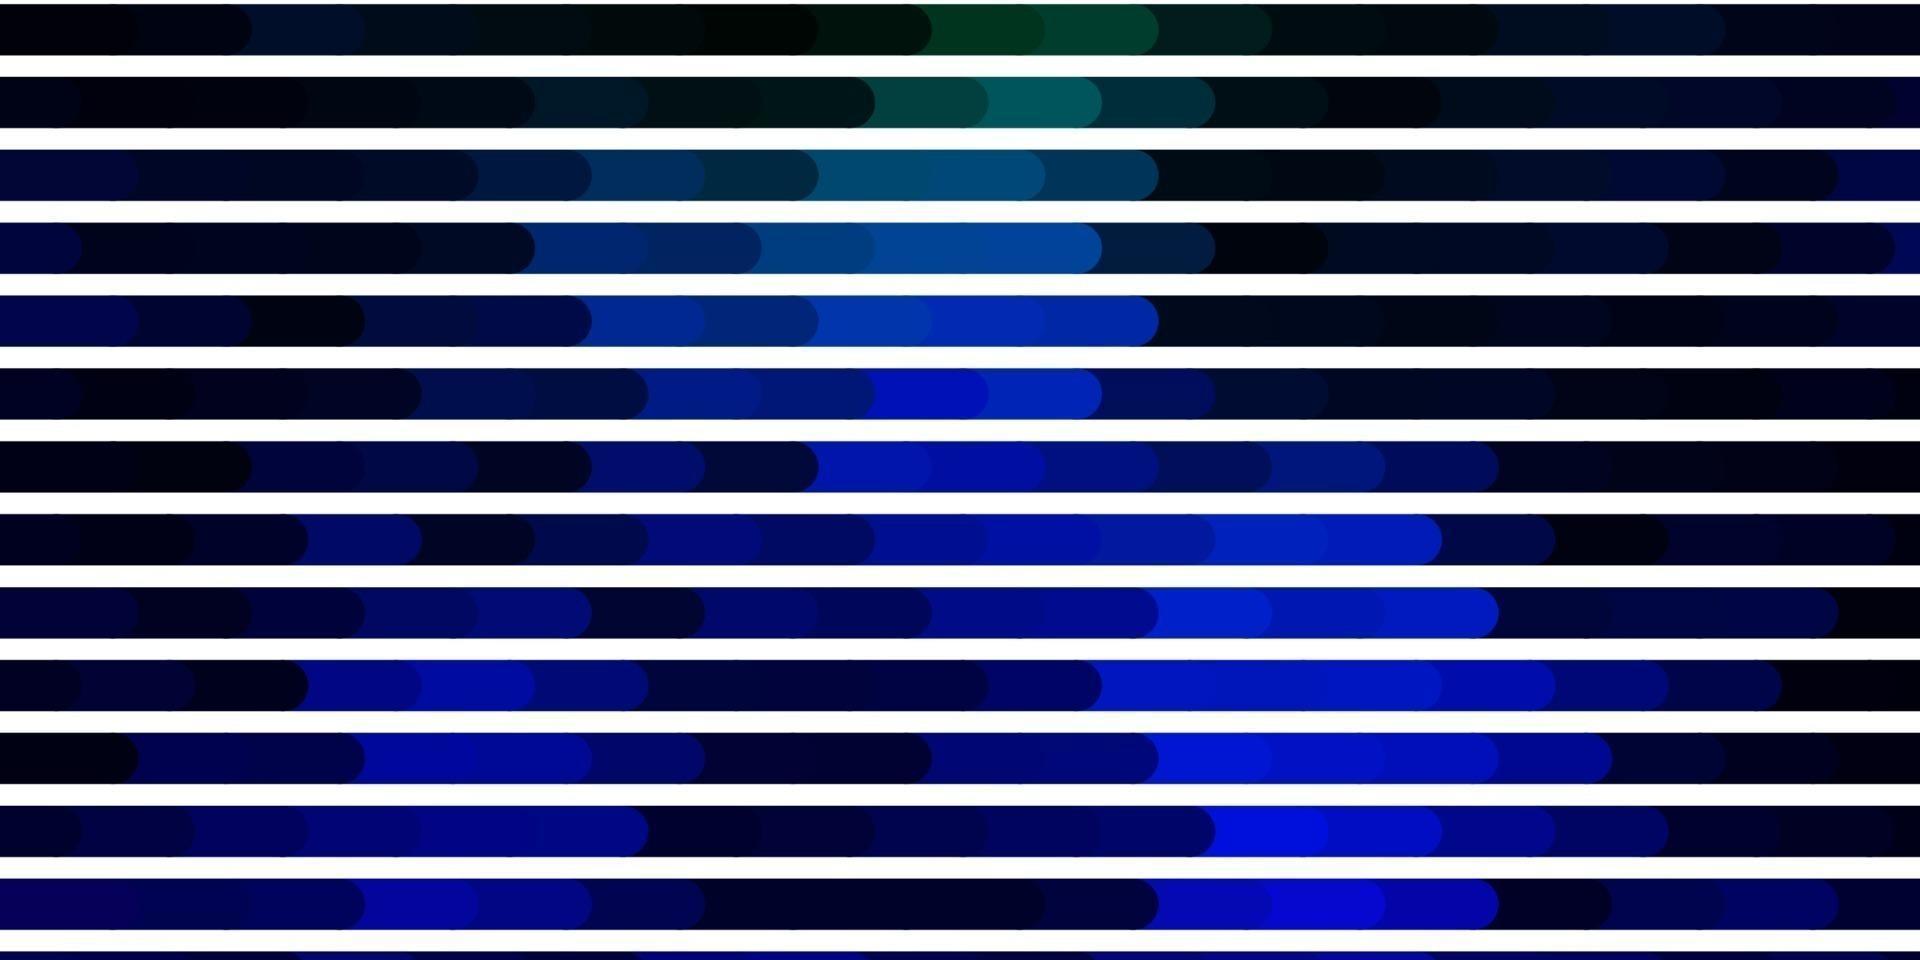 layout de vetor multicolorido escuro com linhas.